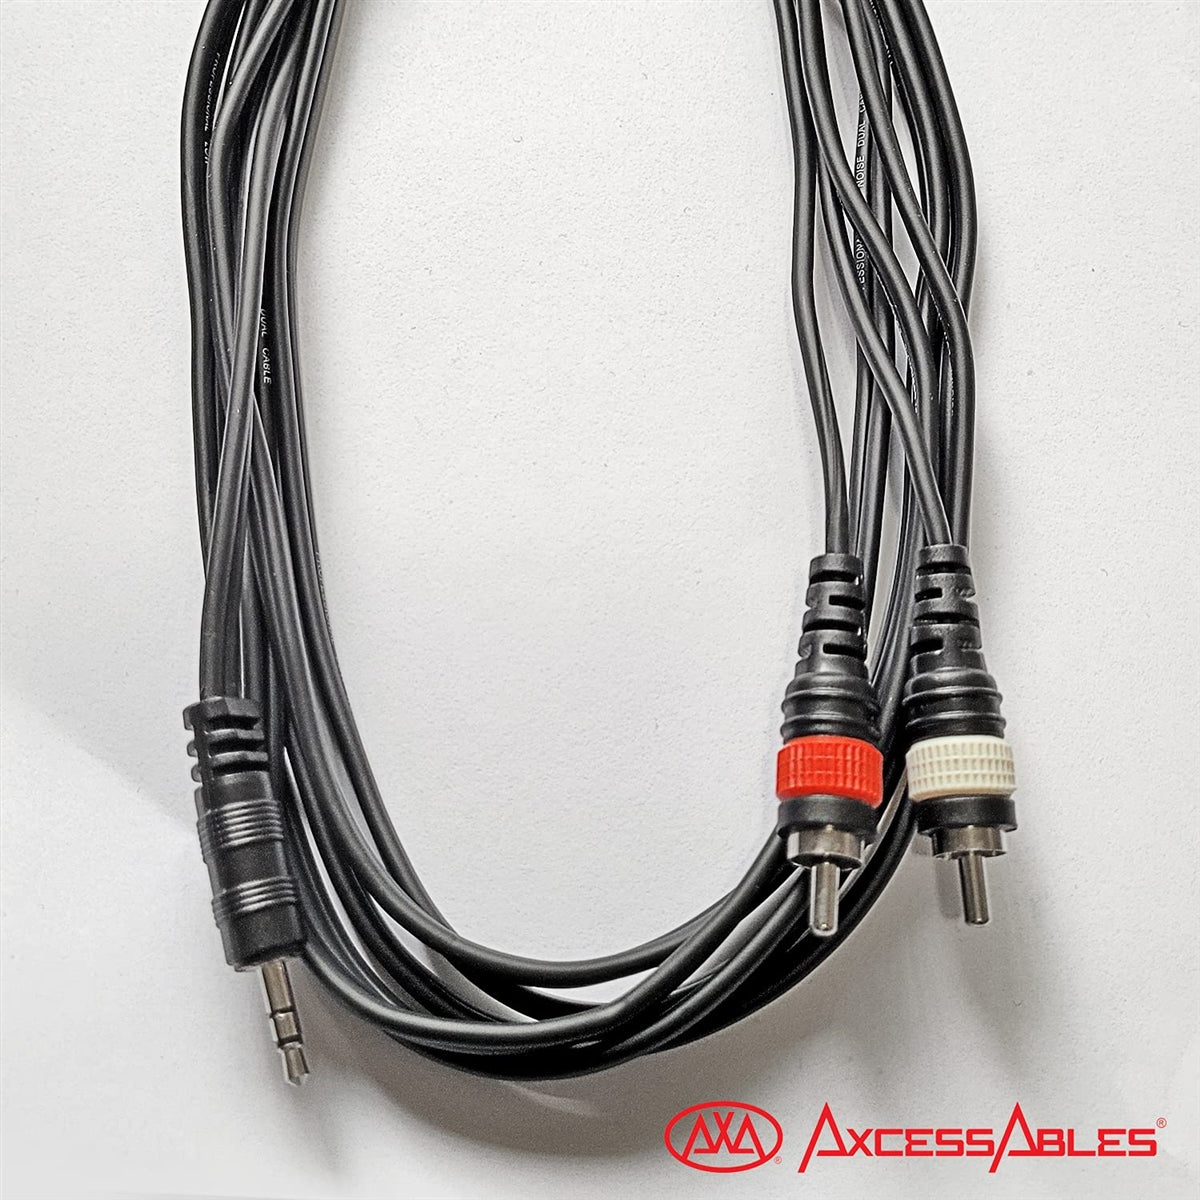 RCA Plug to 3.5mm Mini Jack Audio Adapter